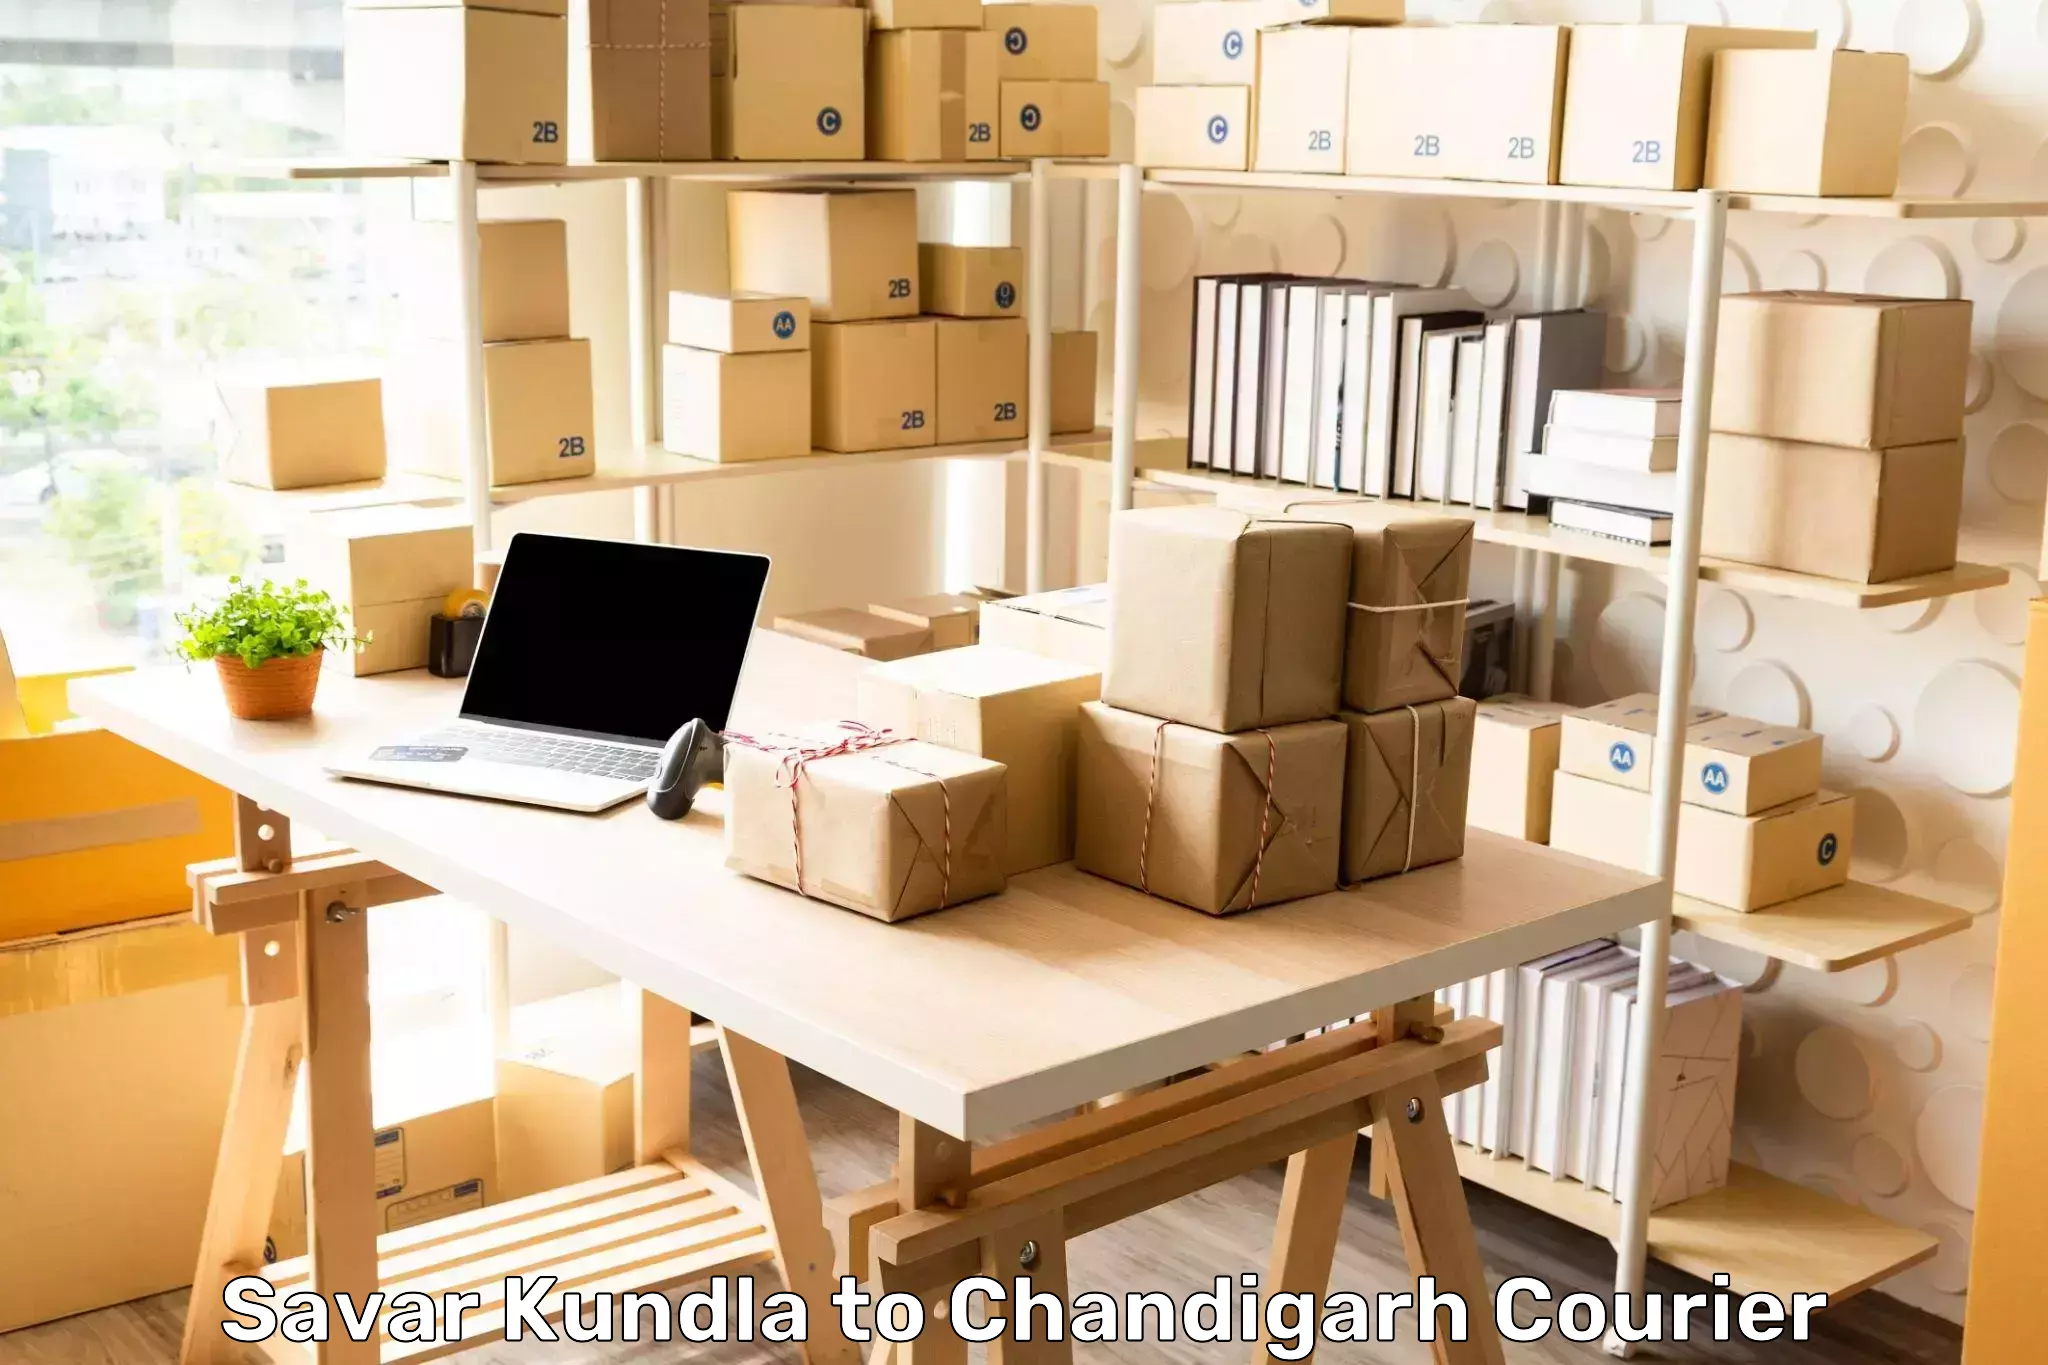 Express courier capabilities Savar Kundla to Chandigarh